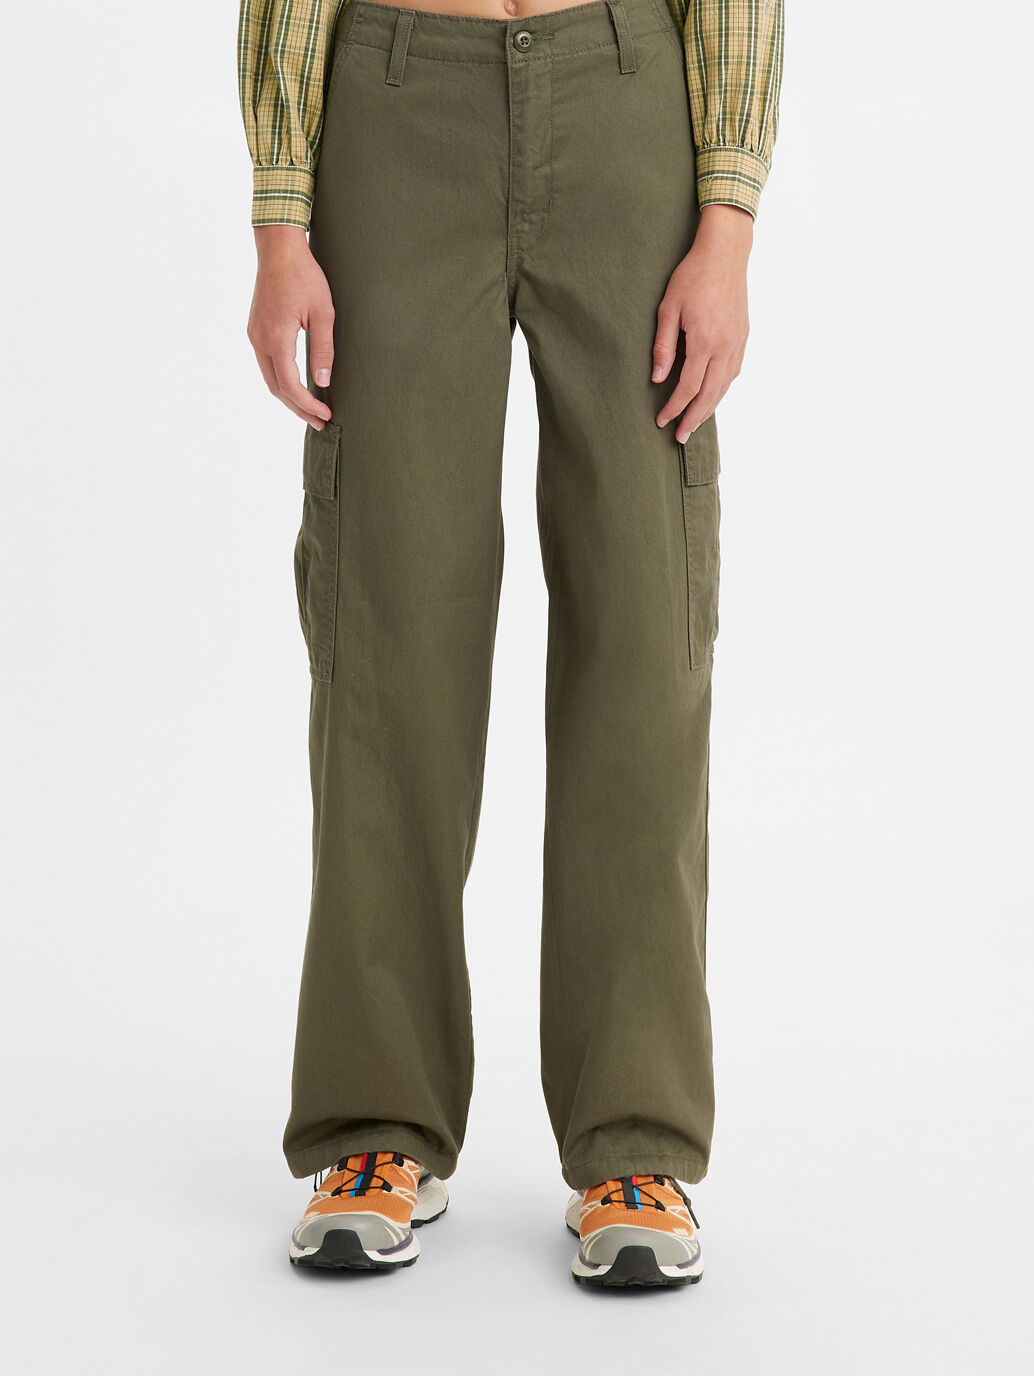 Green 94 Baggy Cargo Pants Fo Women - Browse Pants Online